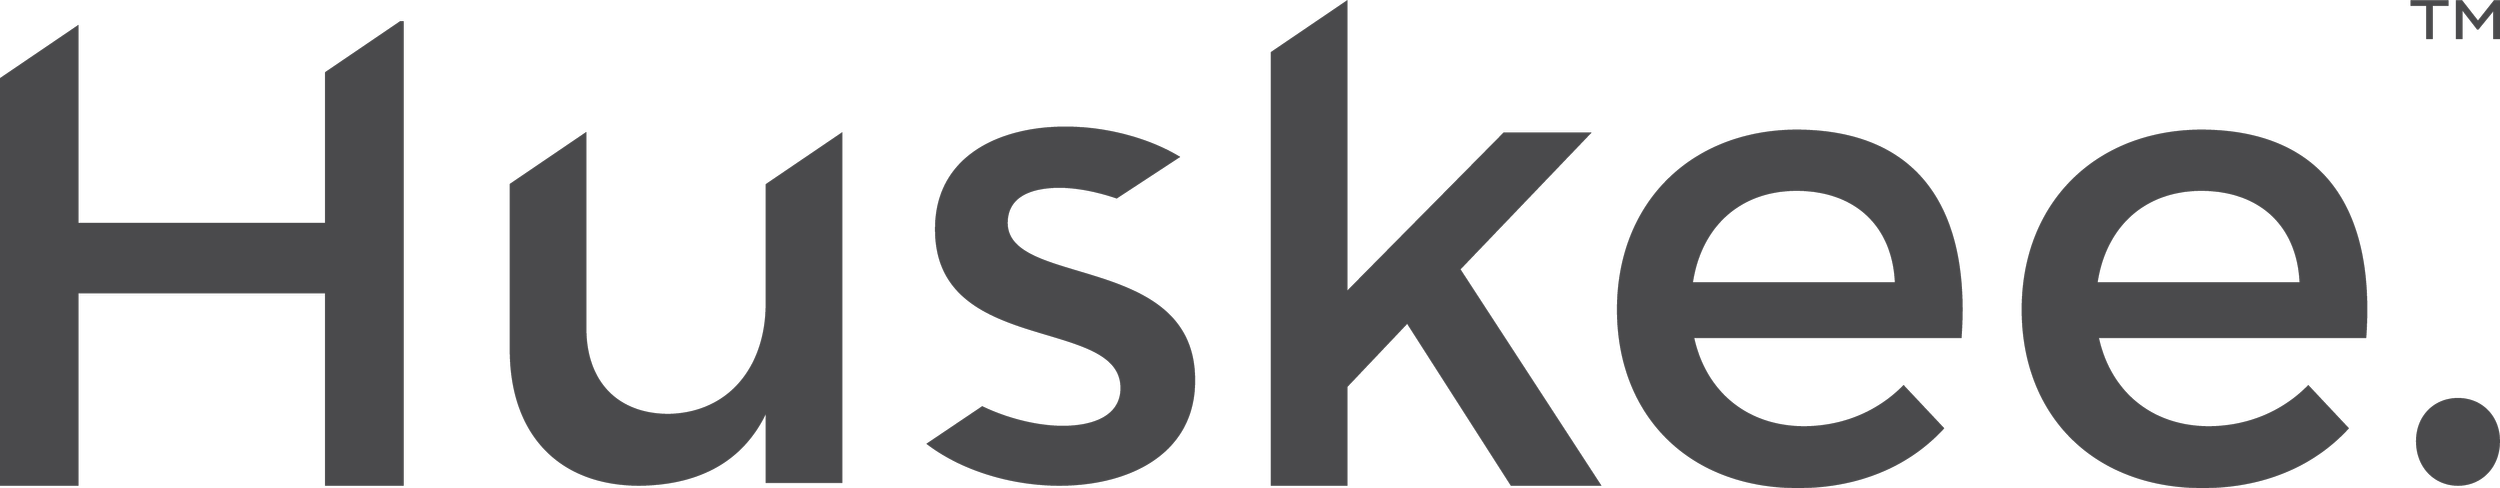 Huskee Logo